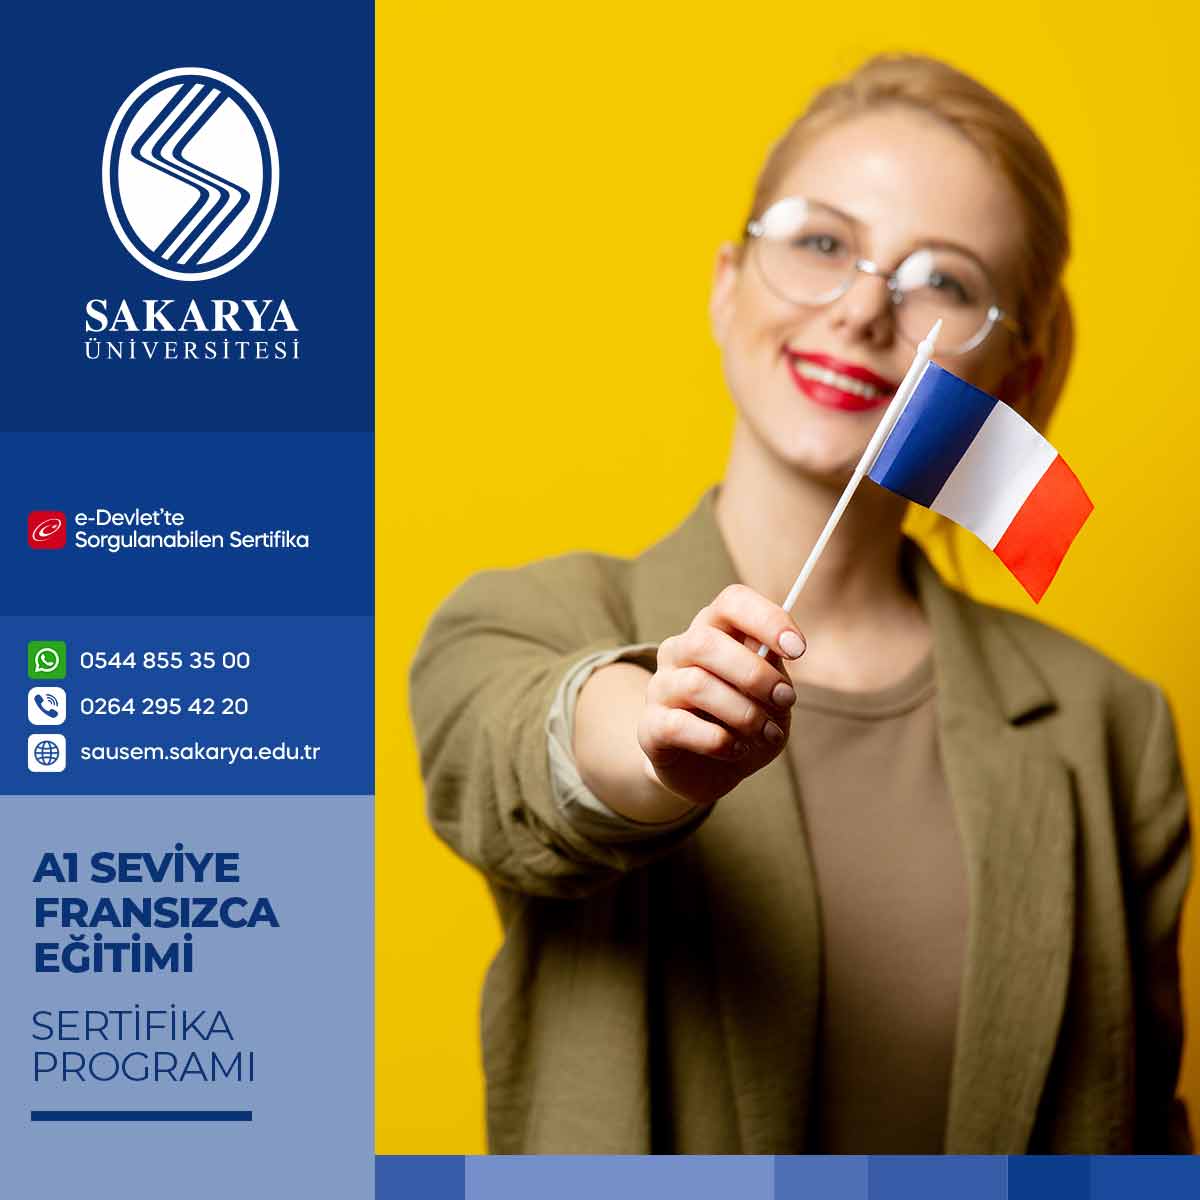 A1 Seviye Fransızca Eğitimi Sertifika Programı